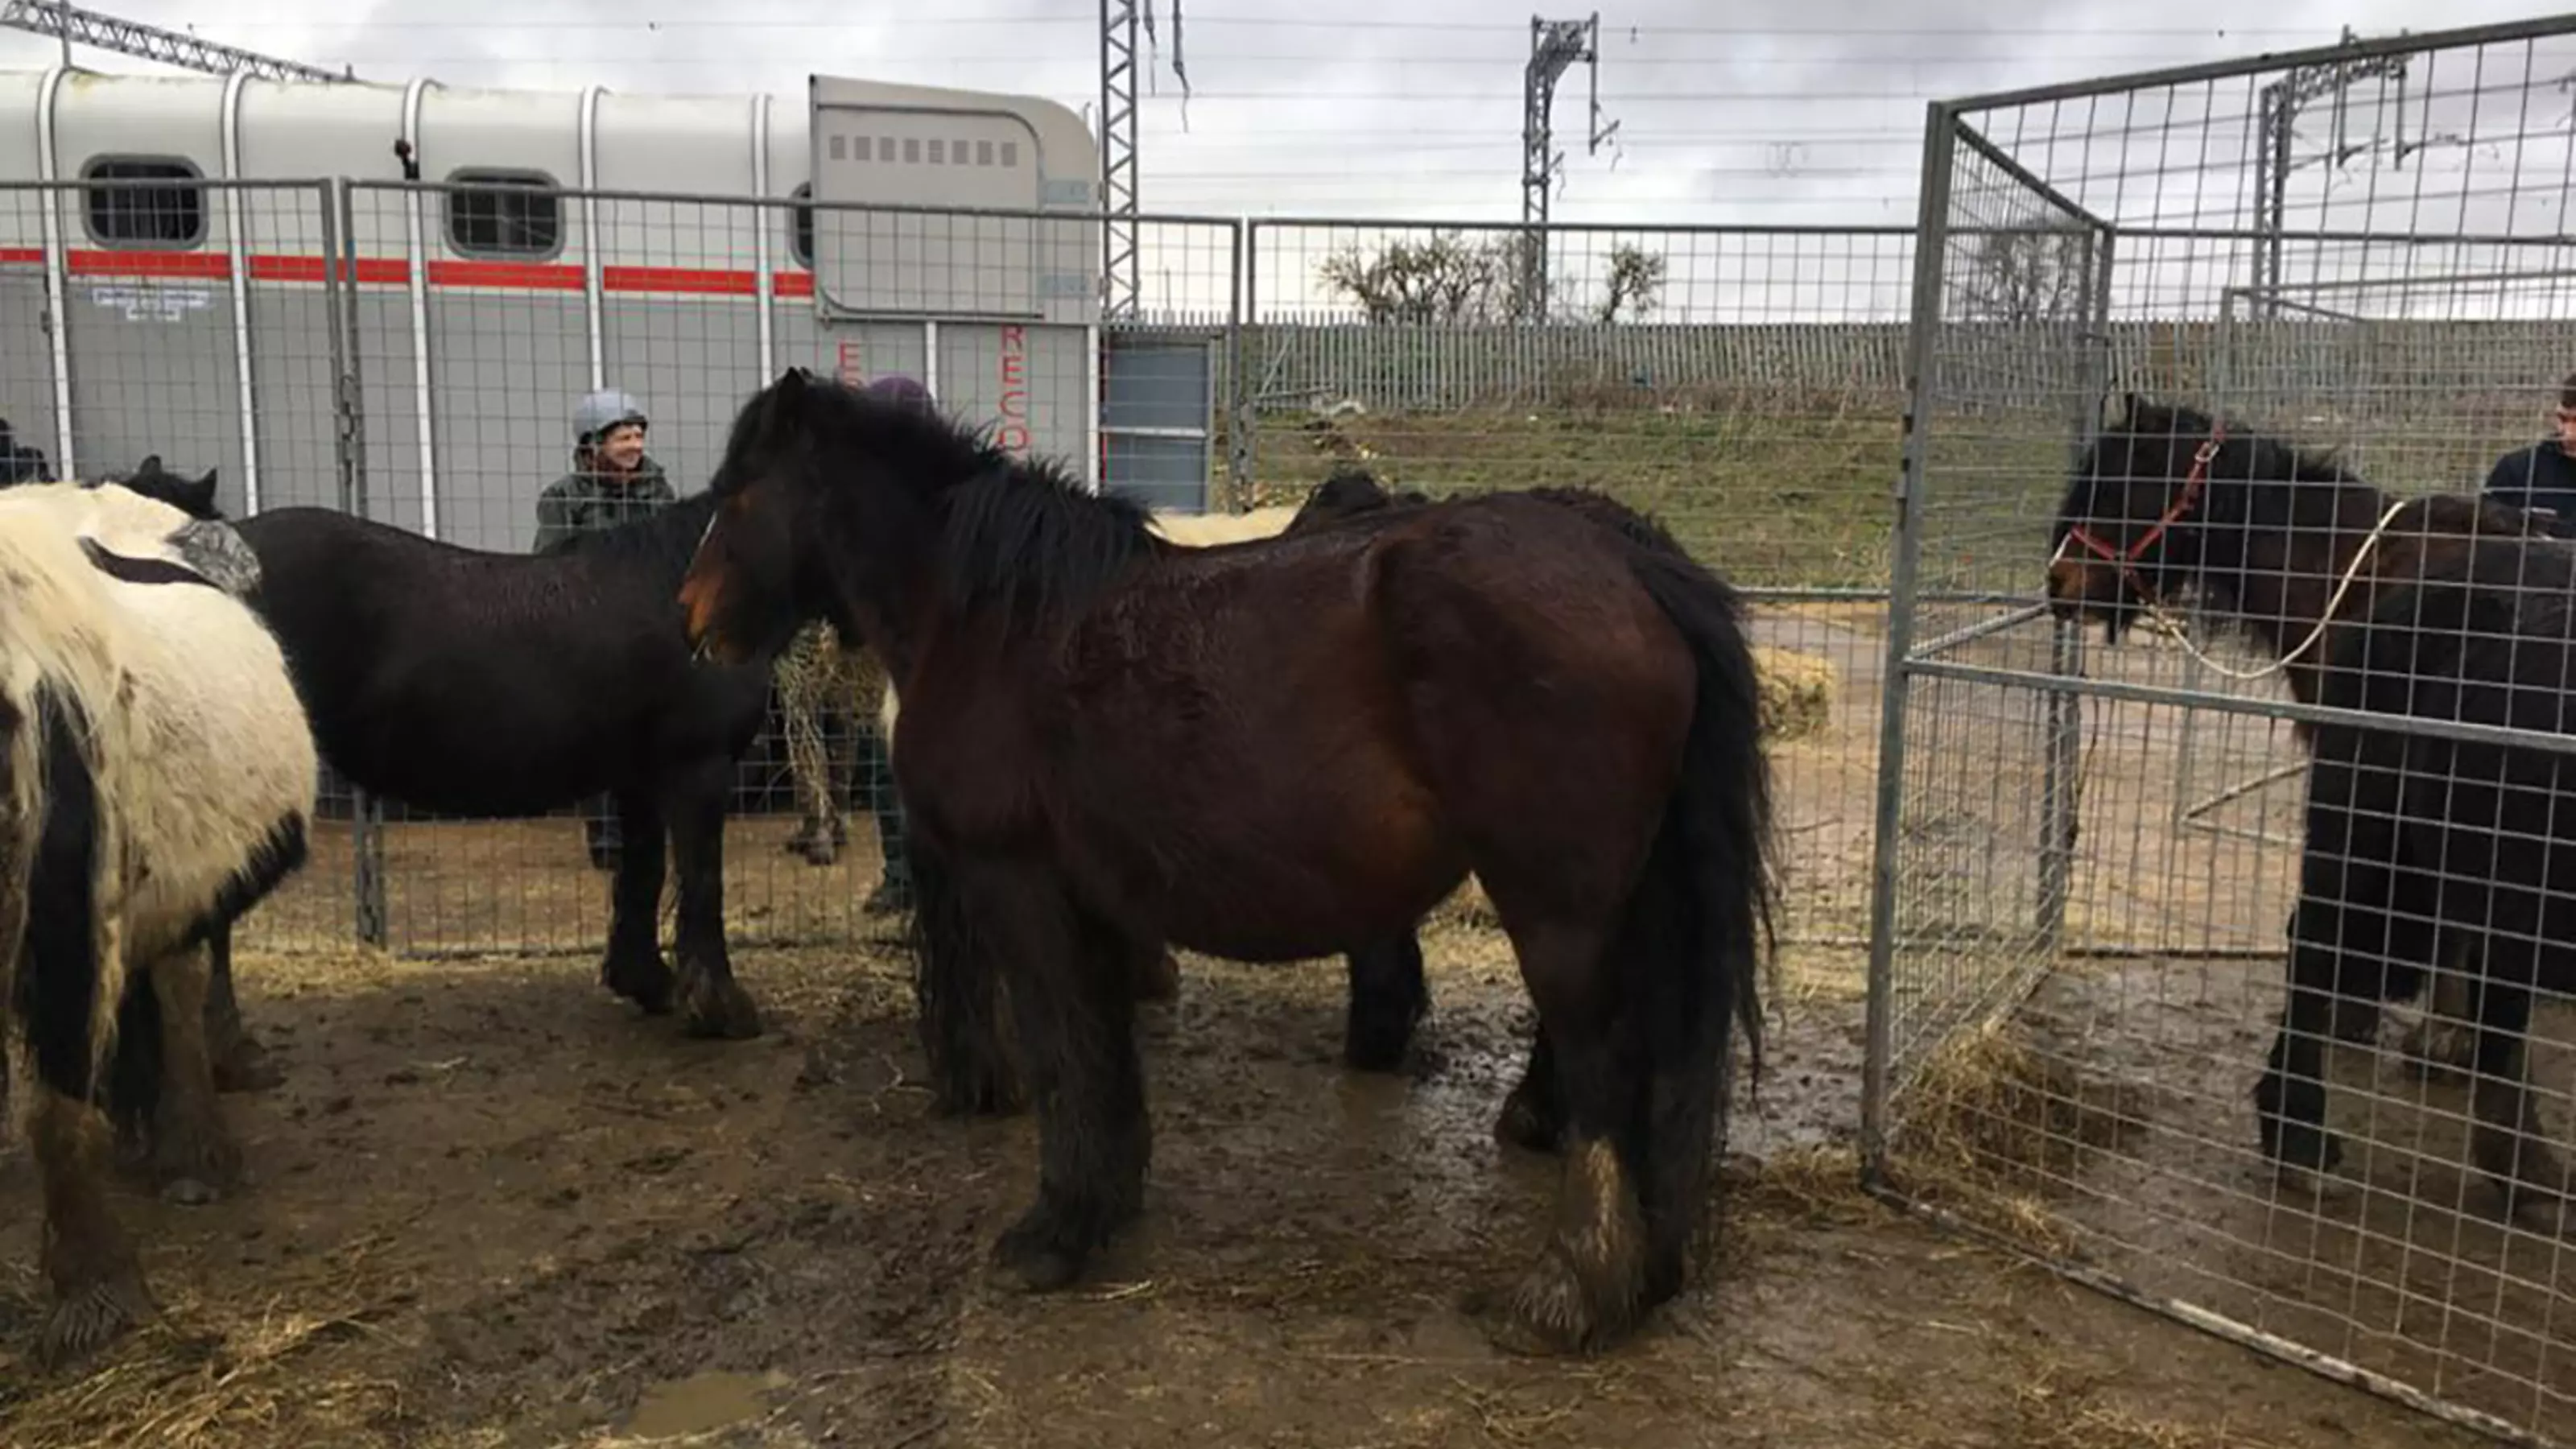 Horses in the pen